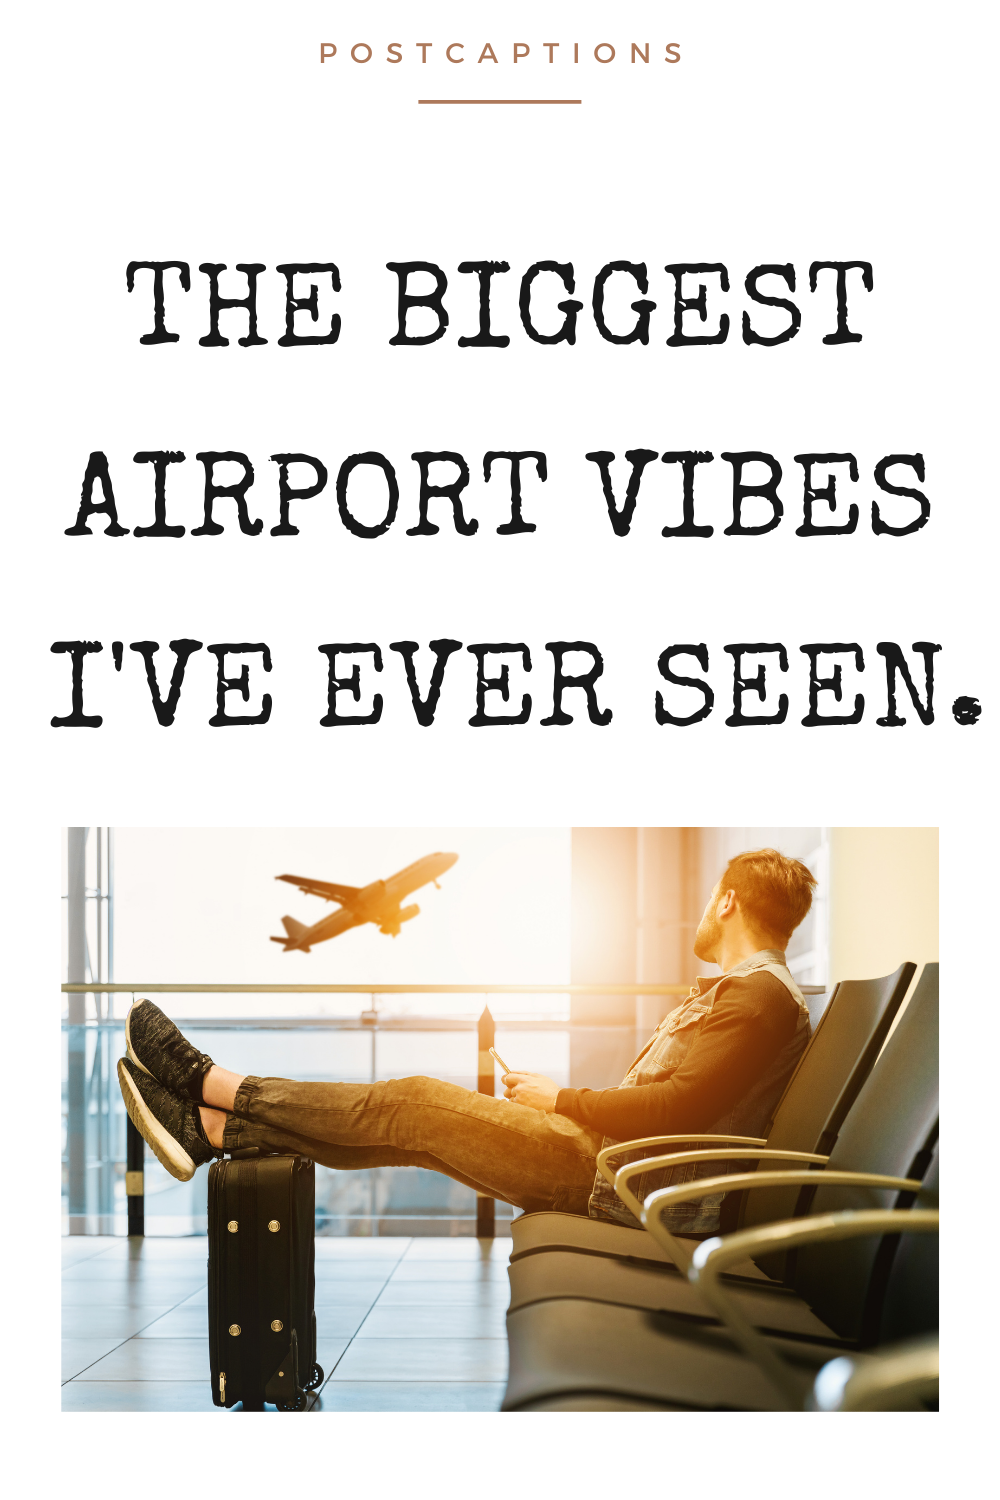 Airport captions